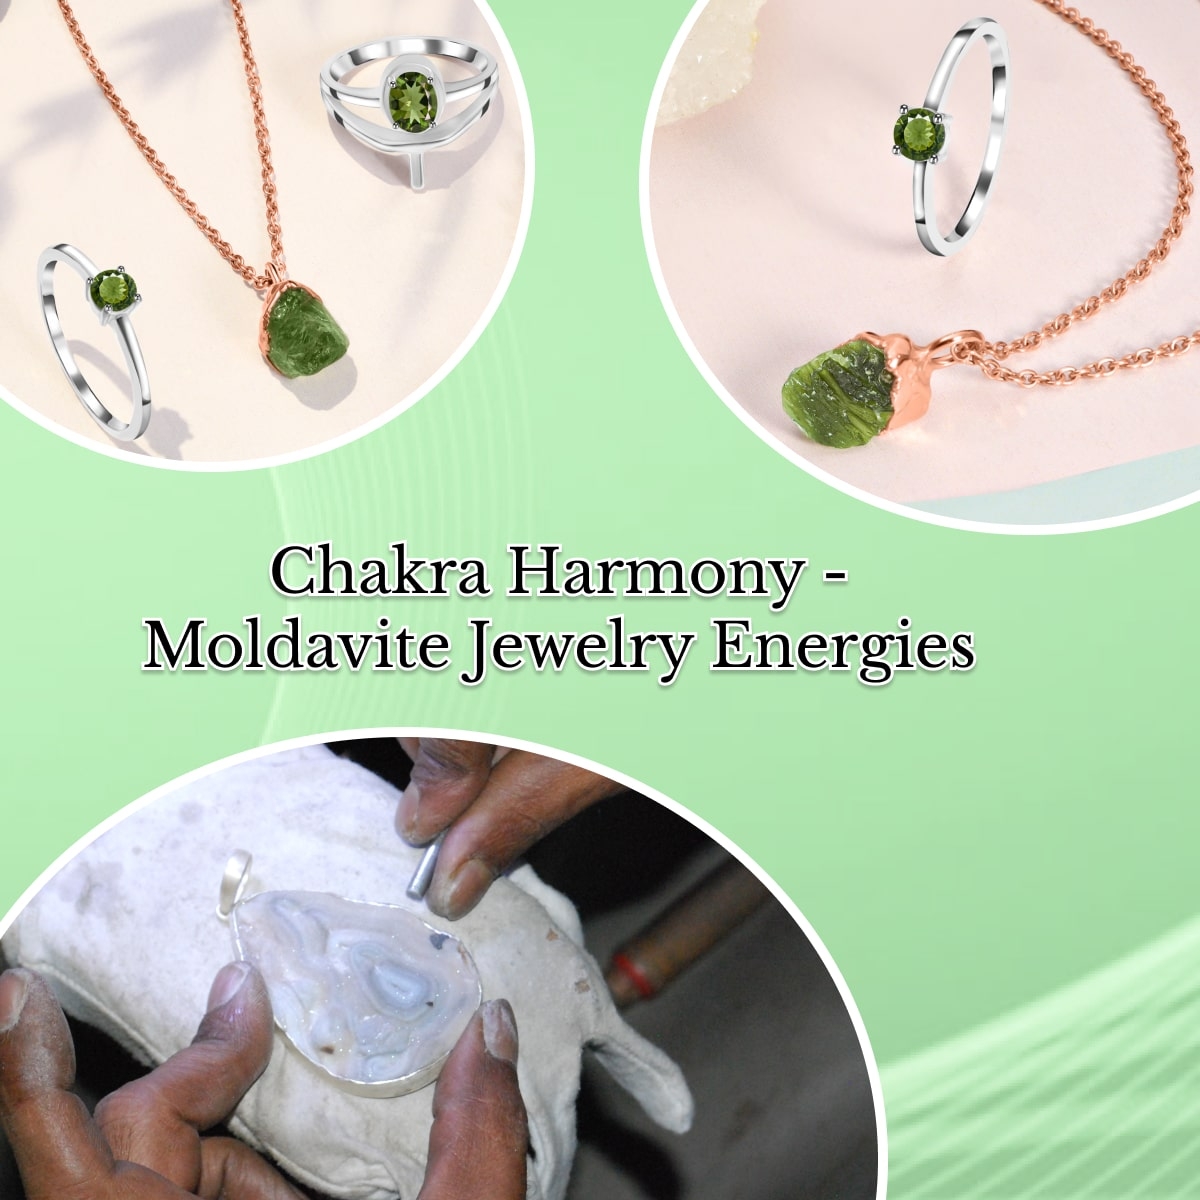 Chakra Jewelry and Moldavite